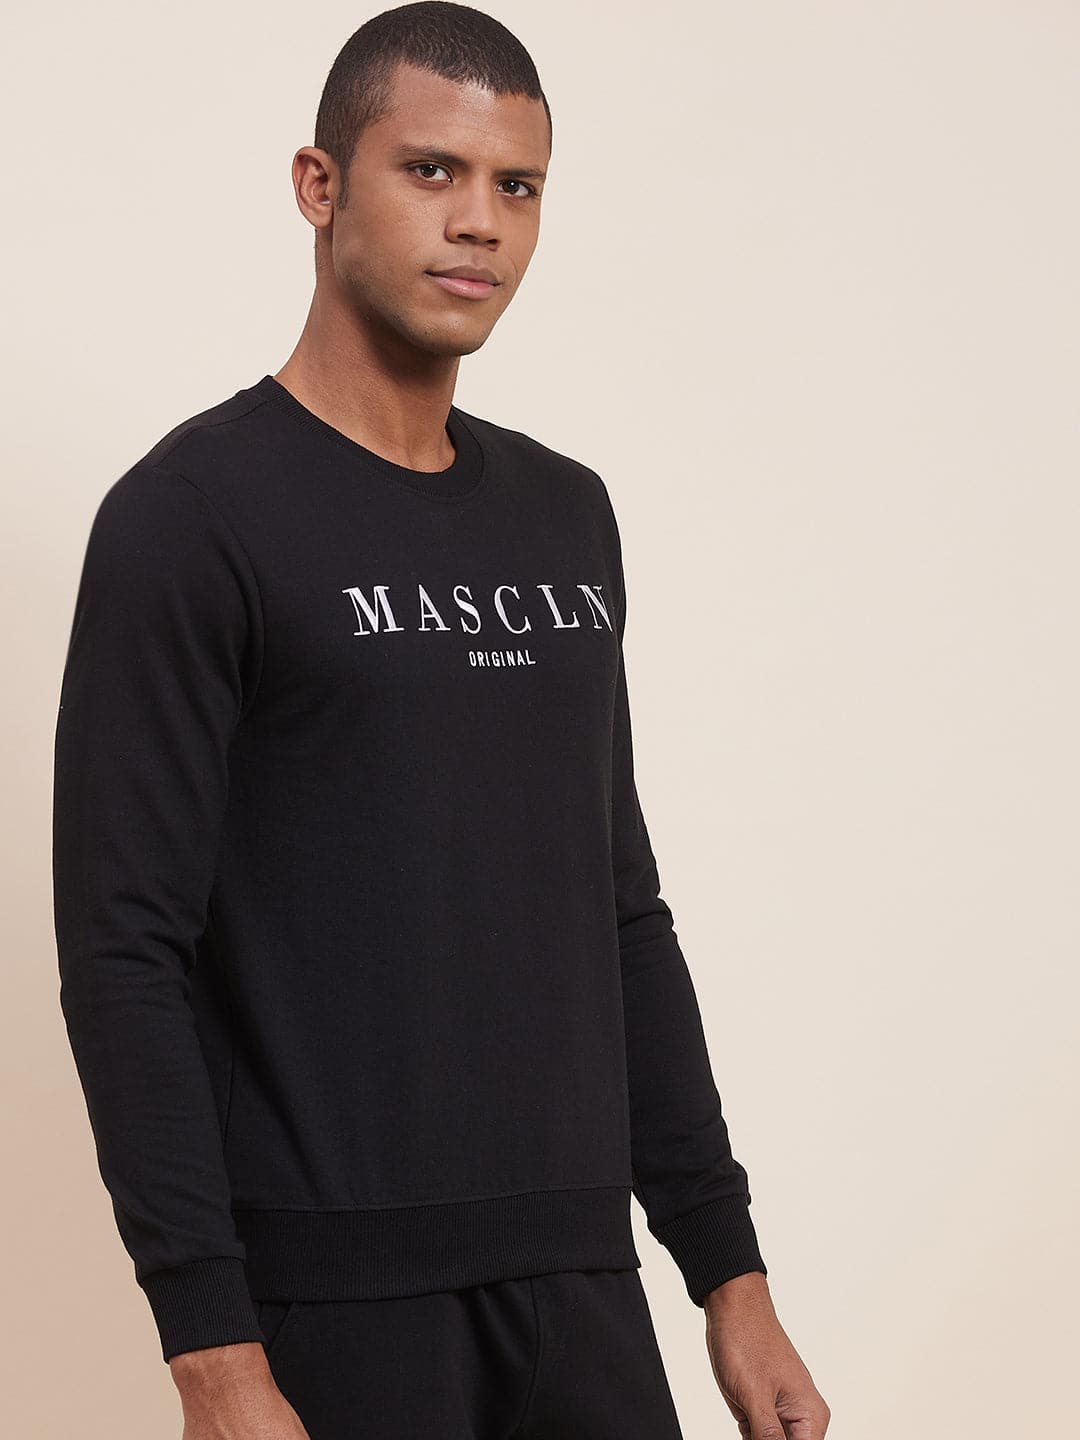 Men's Black MASCLN Embroidered Sweatshirt - LYUSH-MASCLN